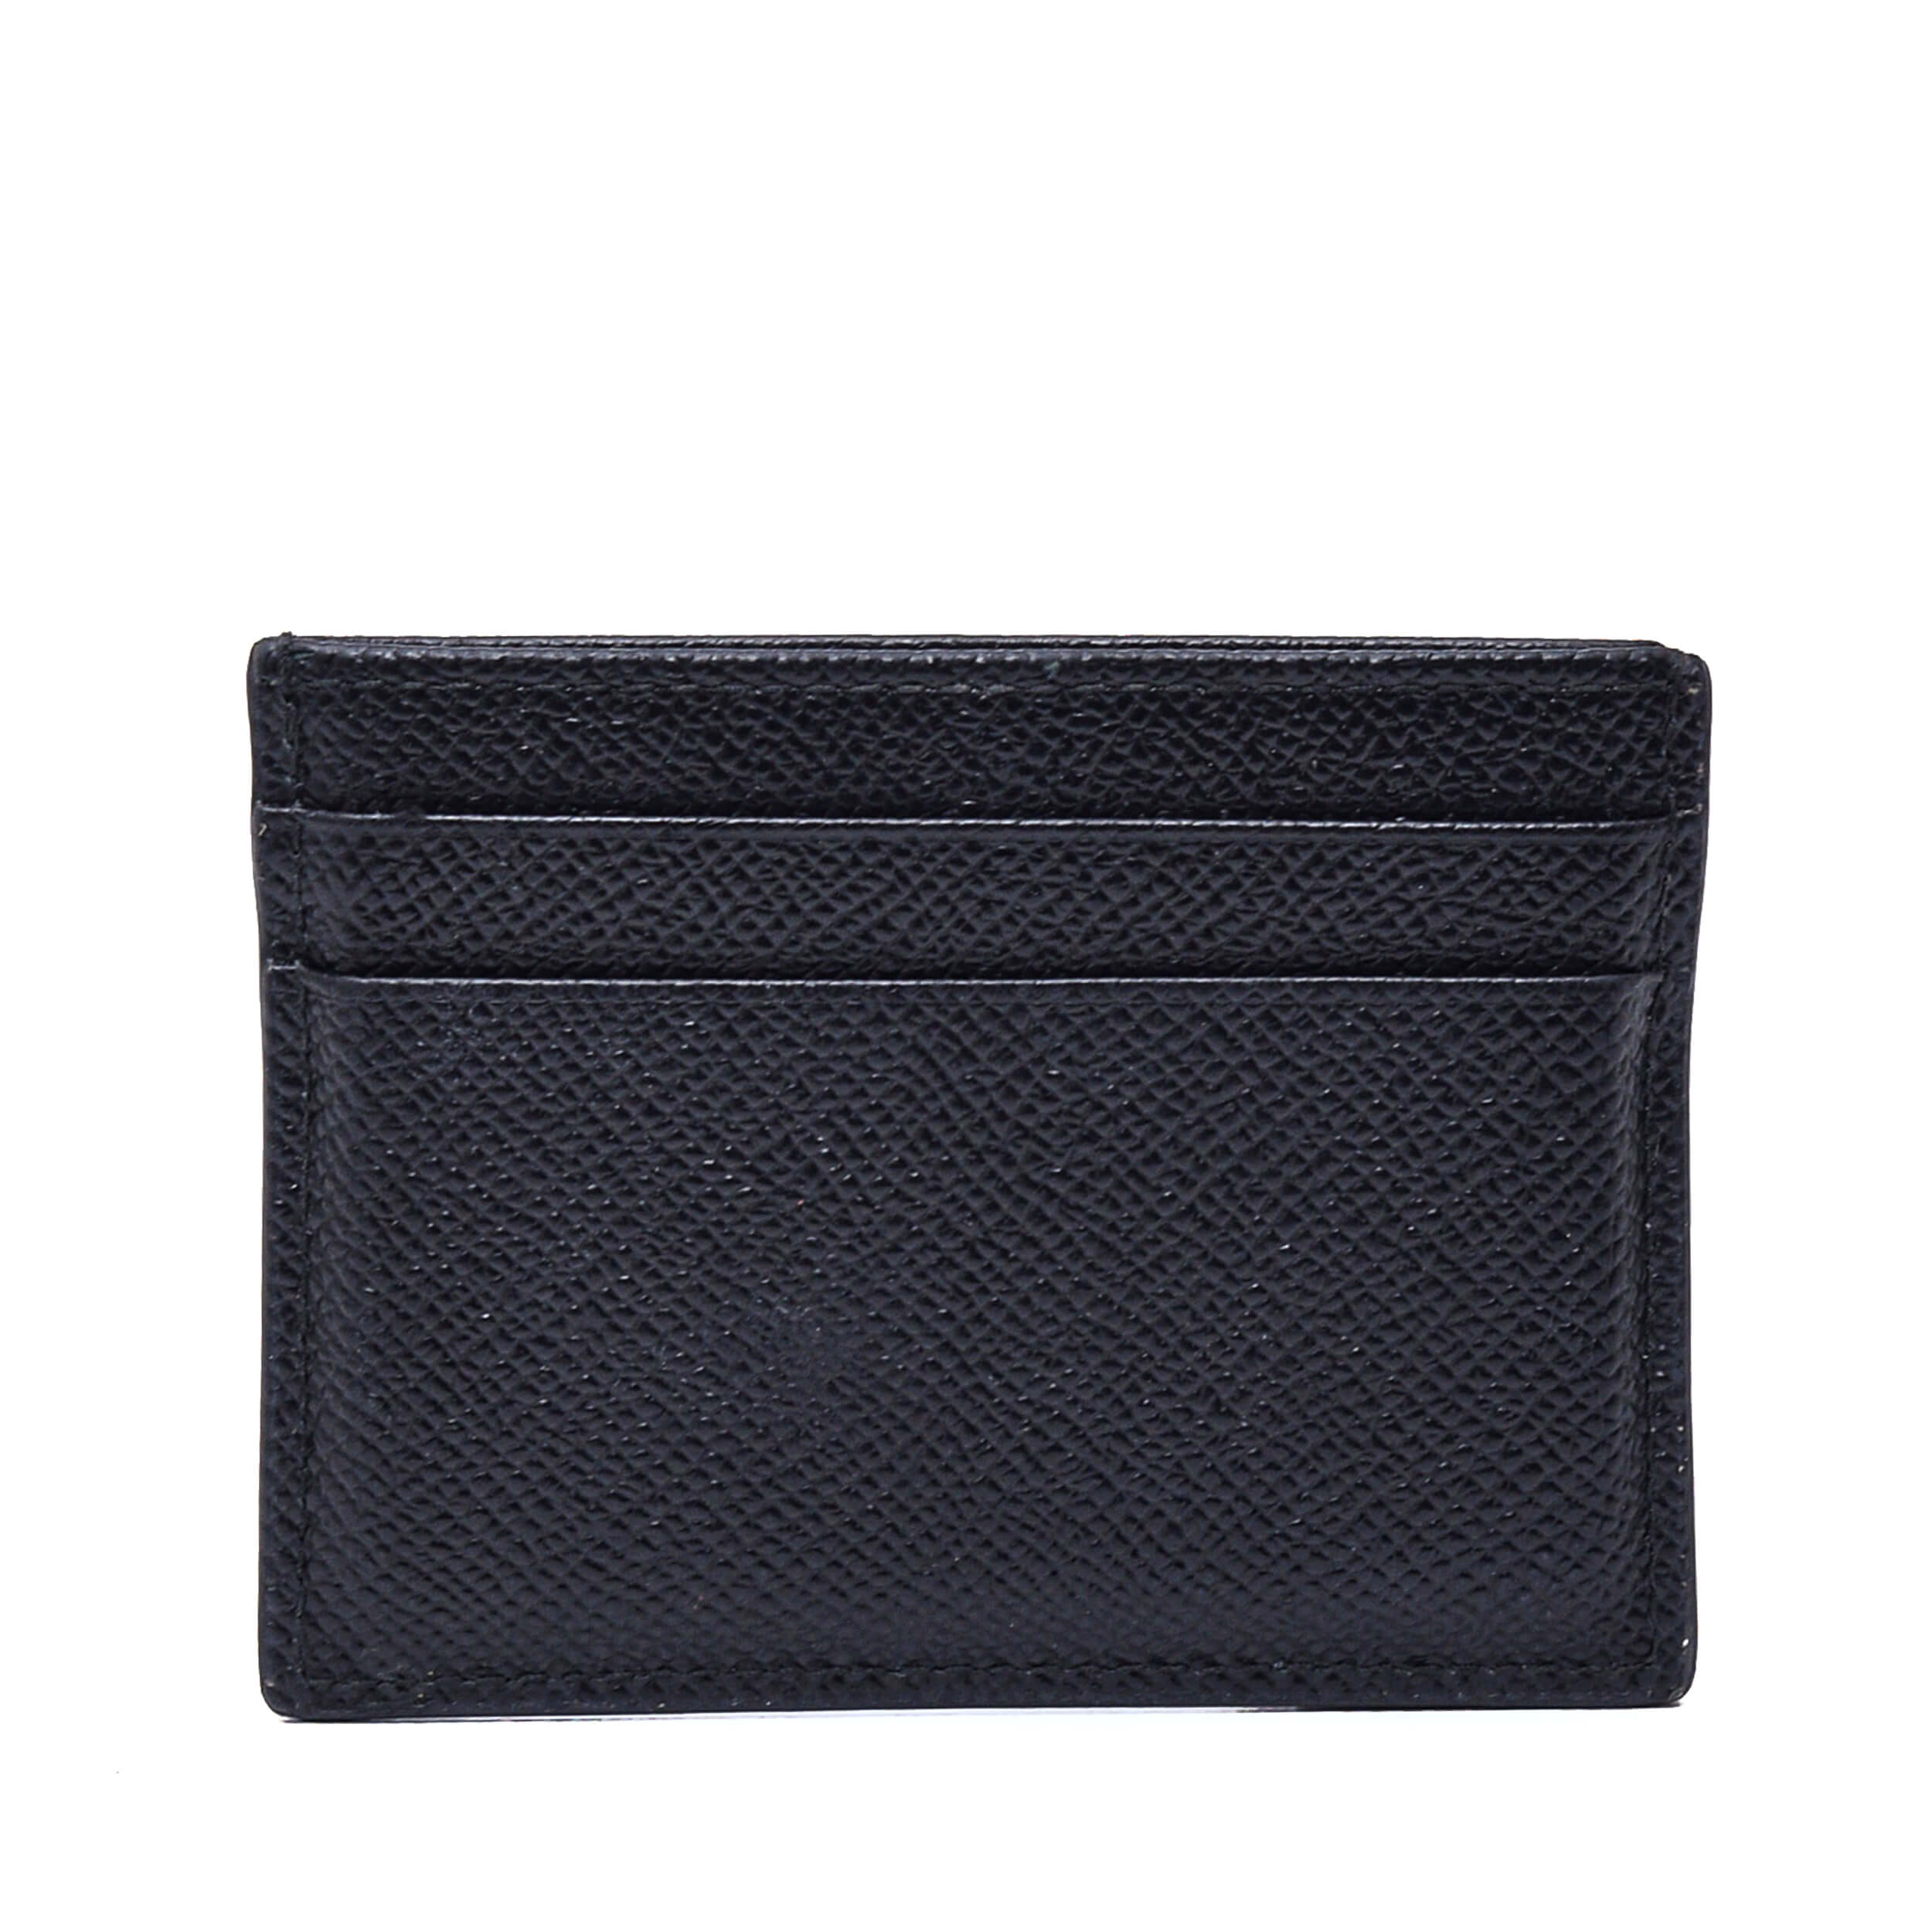 Dolce Gabbana - Black Leather Wallet